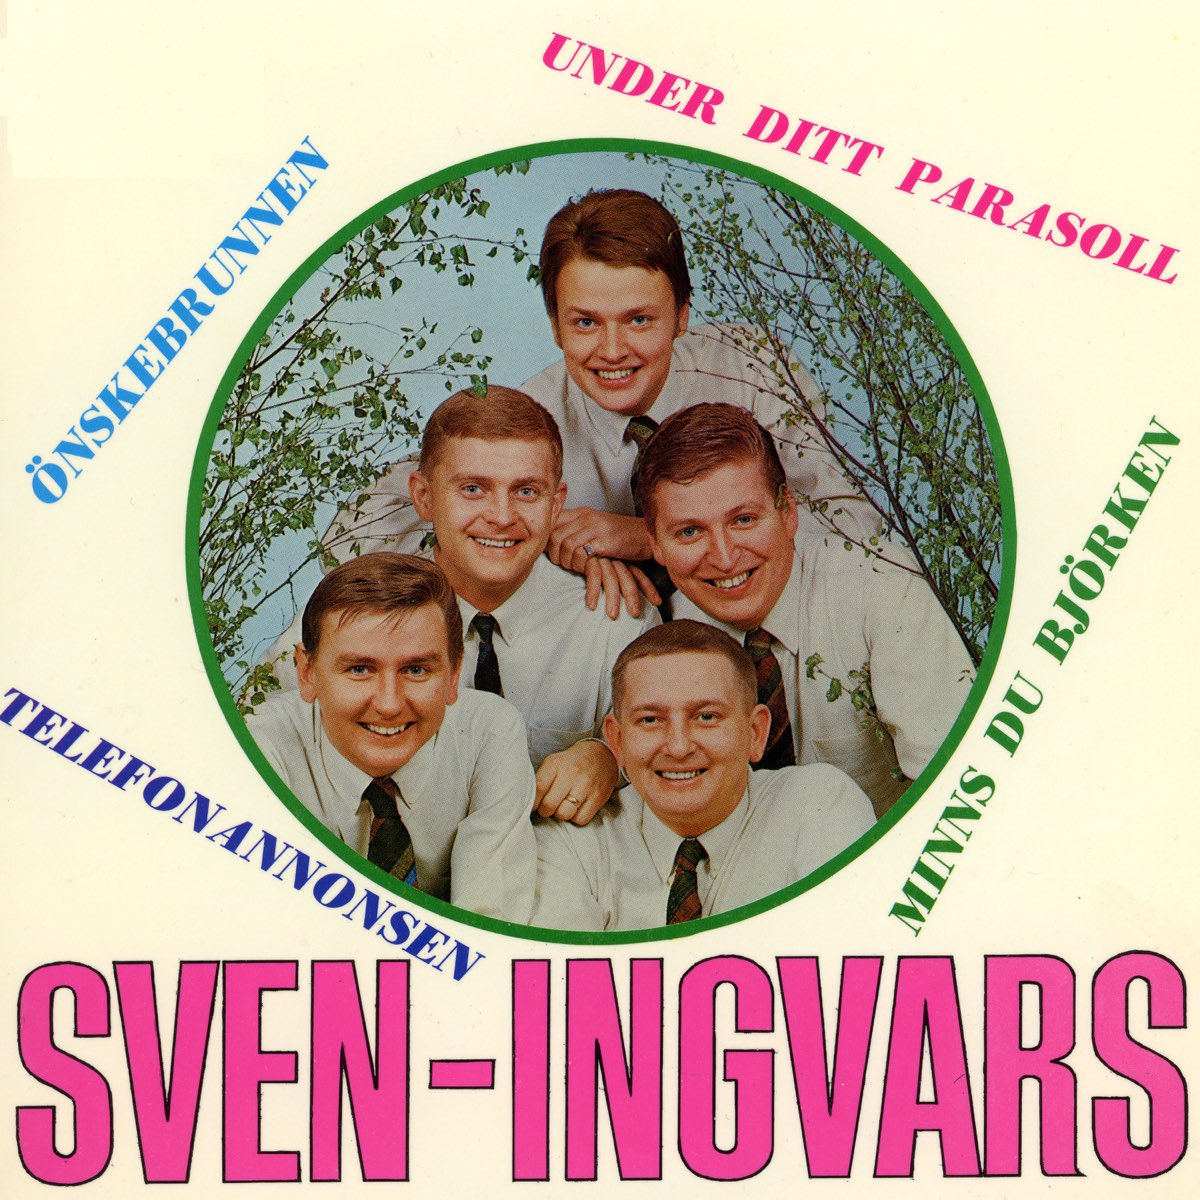 Under ditt parasoll - EP - Album by Sven-Ingvars - Apple Music